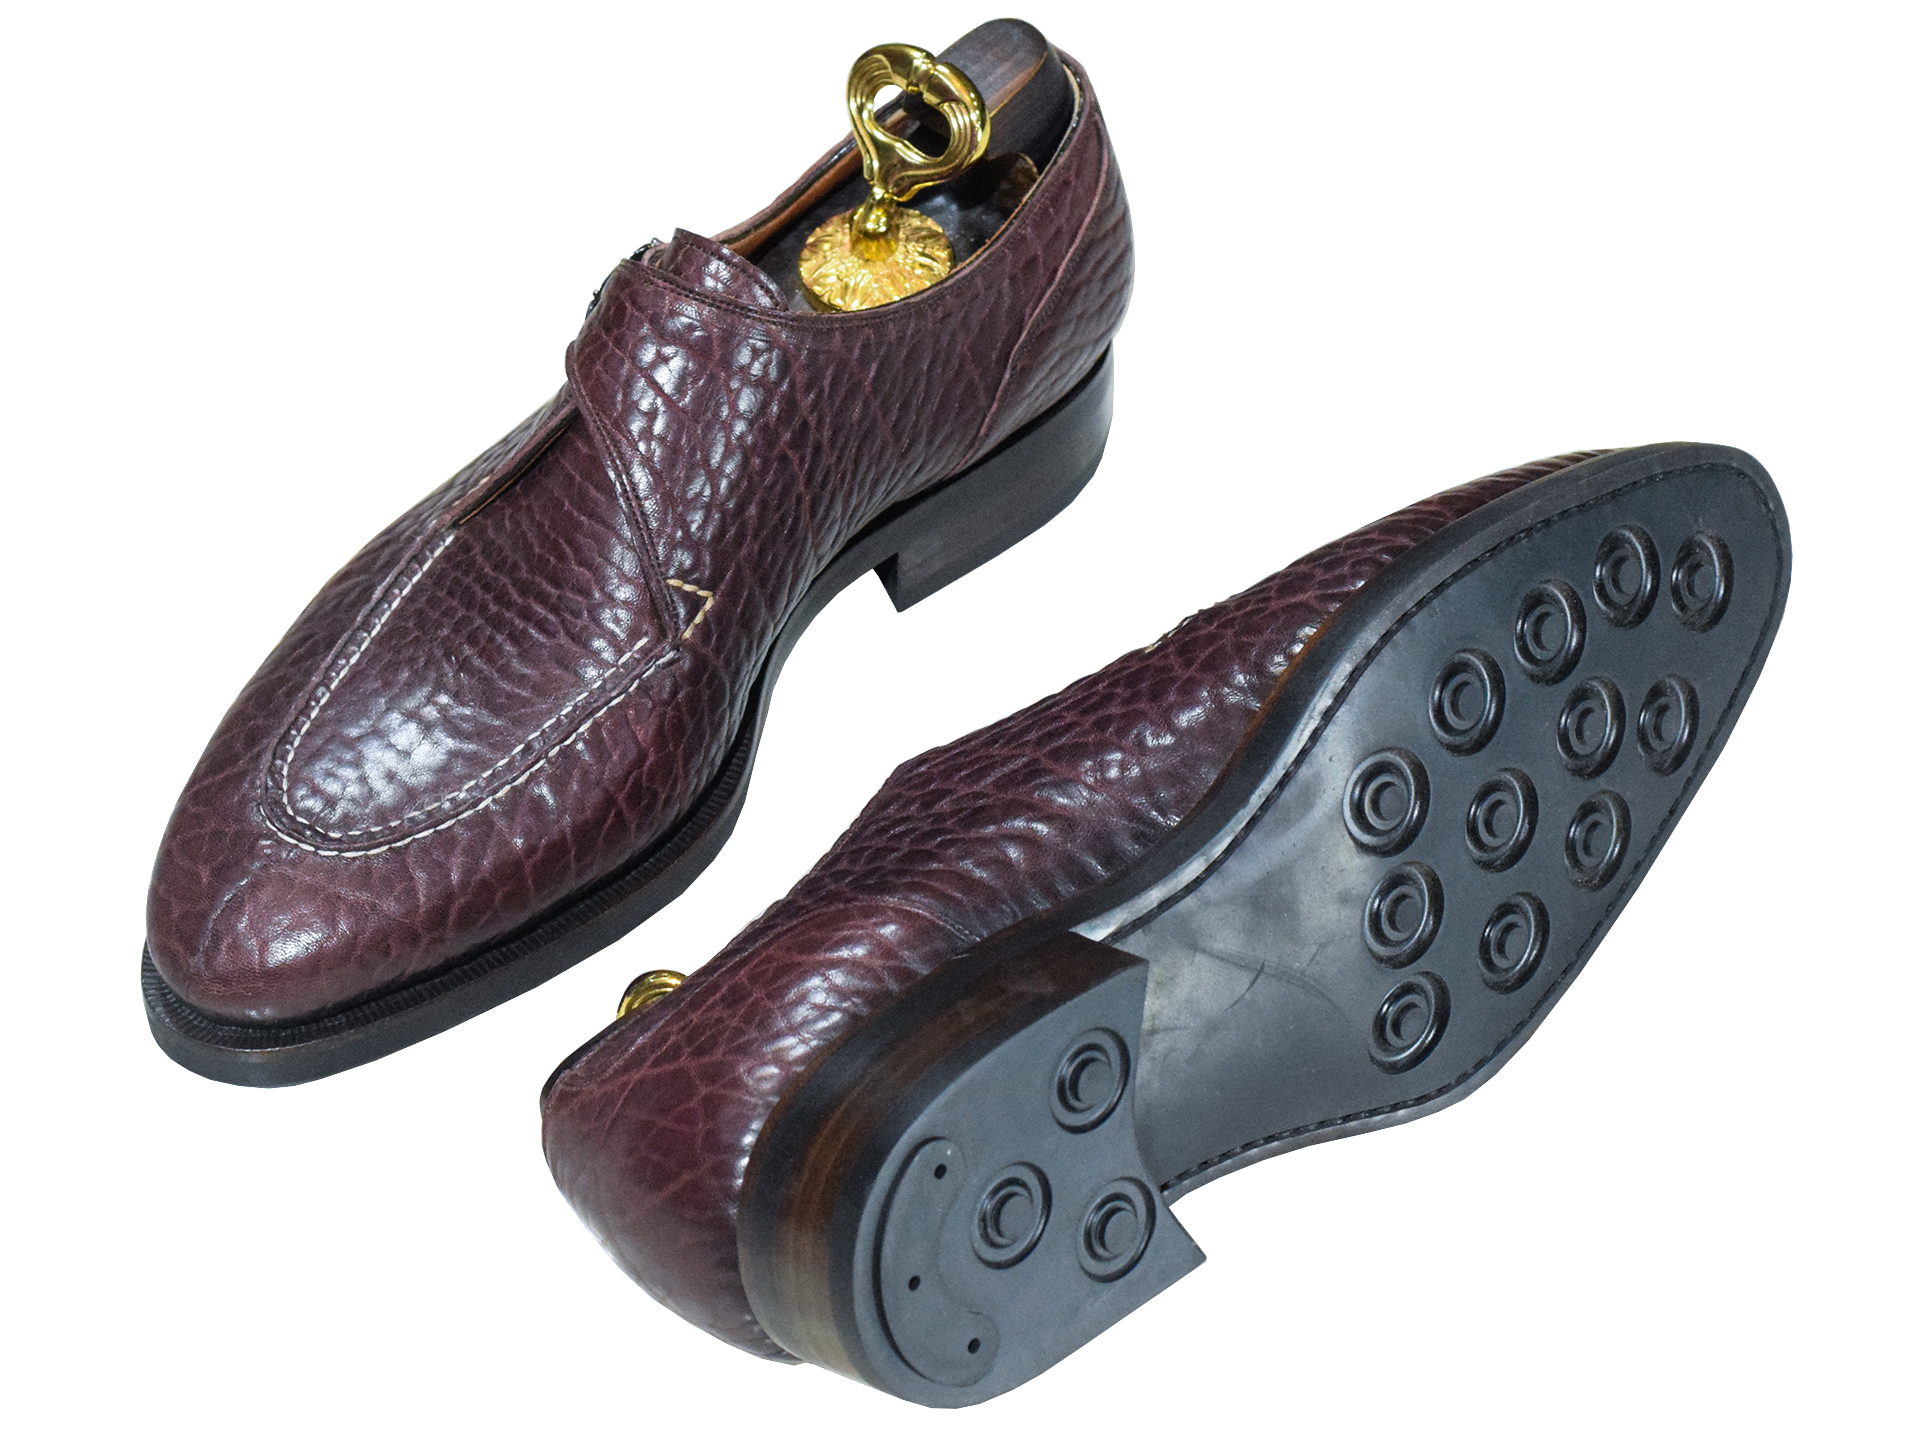 MTO single monkstrap split toe shoes - Bison leather